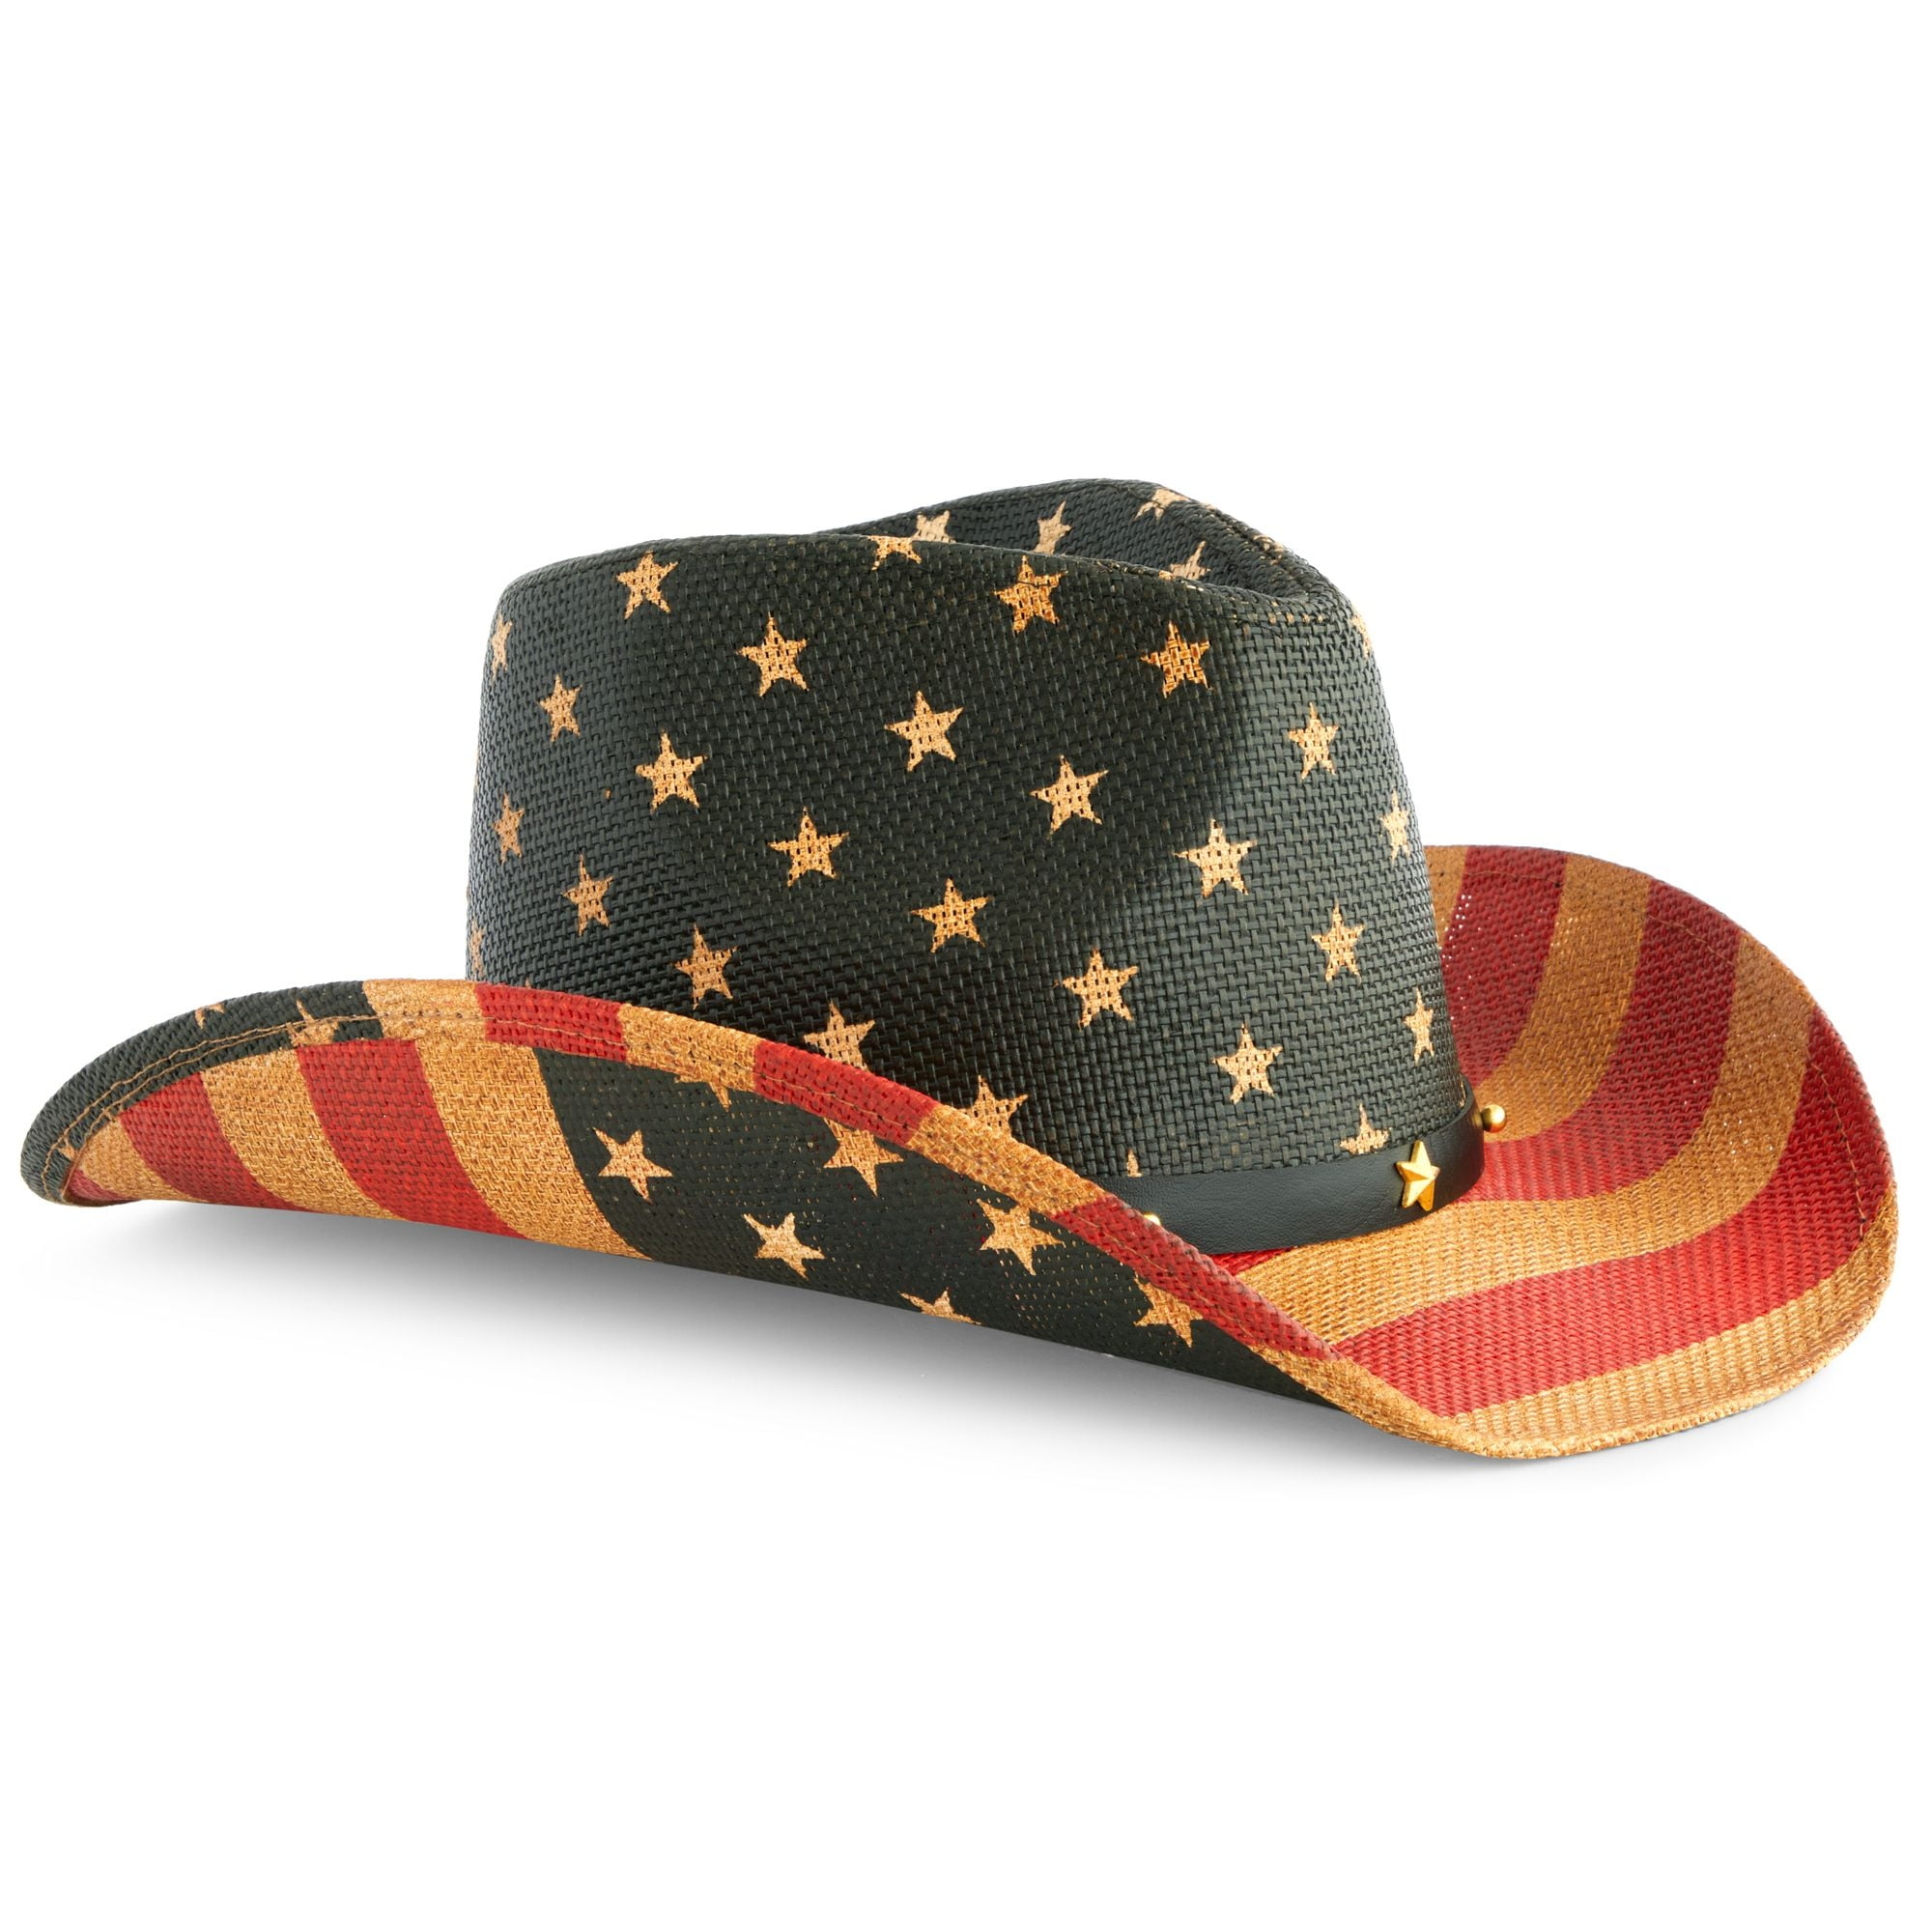 USA Straw American Flag Cowboy Hat for Men, Women, Looks Vintage ...